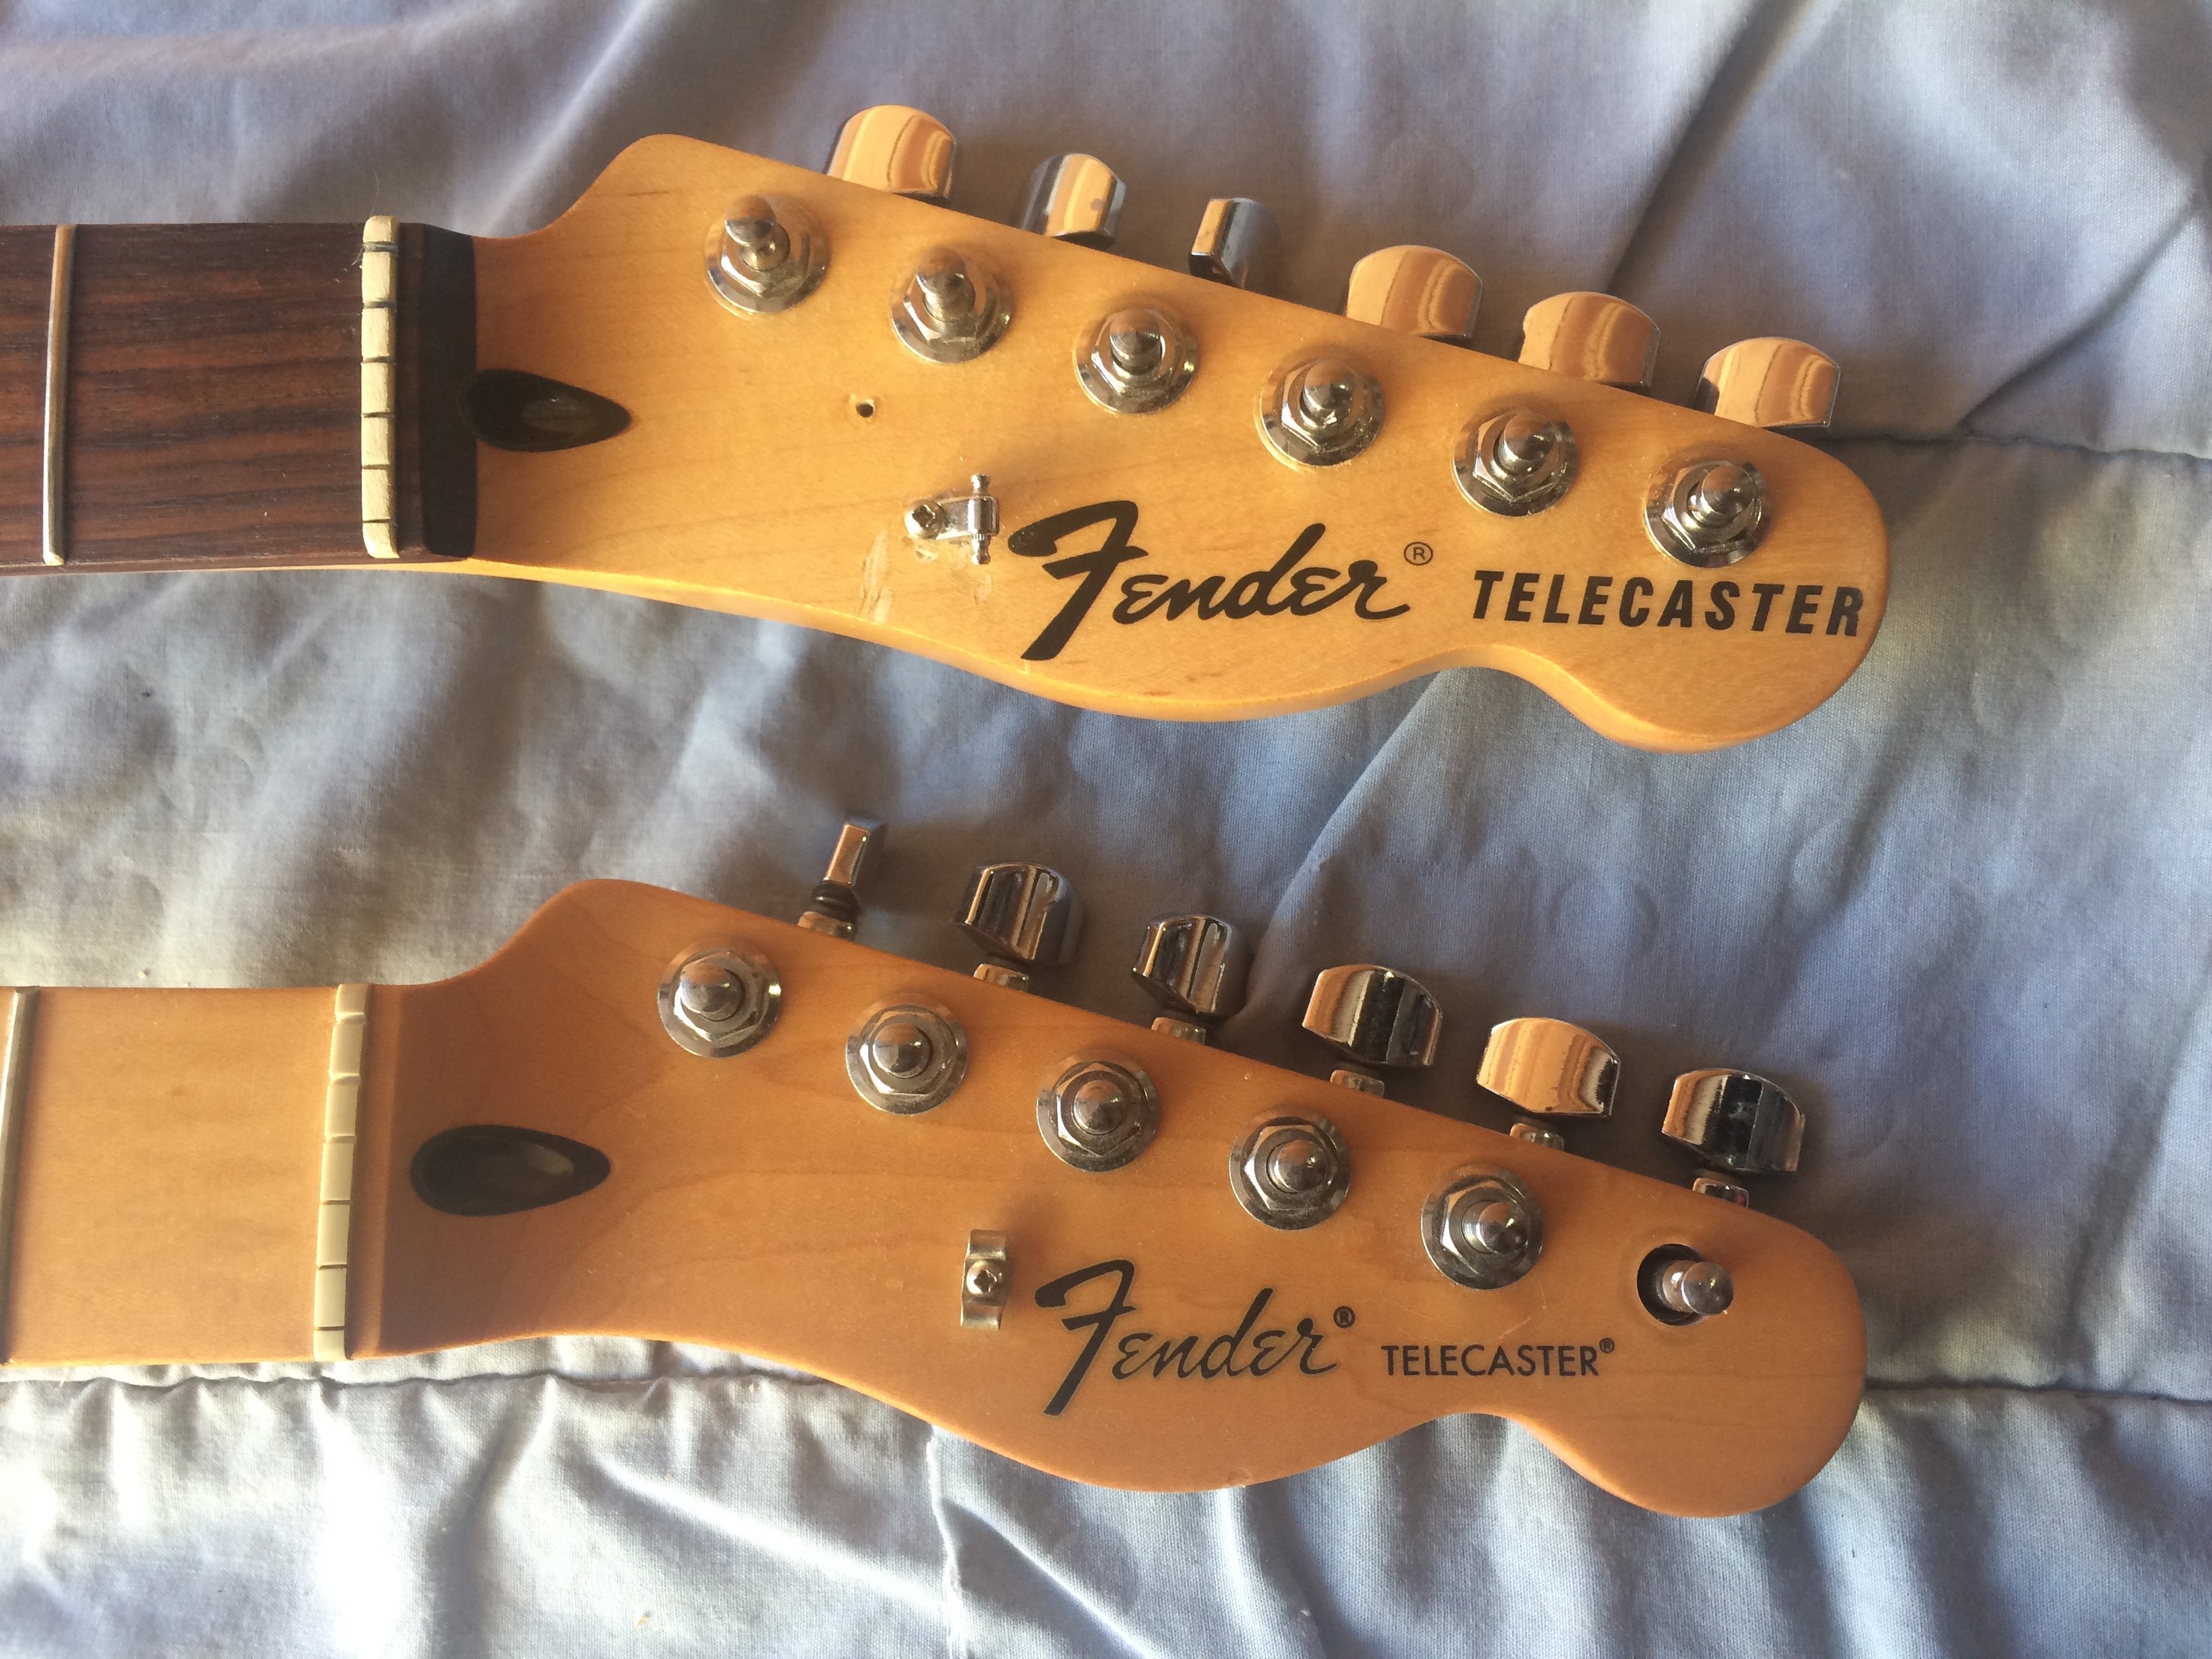 I Got a Fake Fender! How to Spot Counterfeit Guitars (Video)